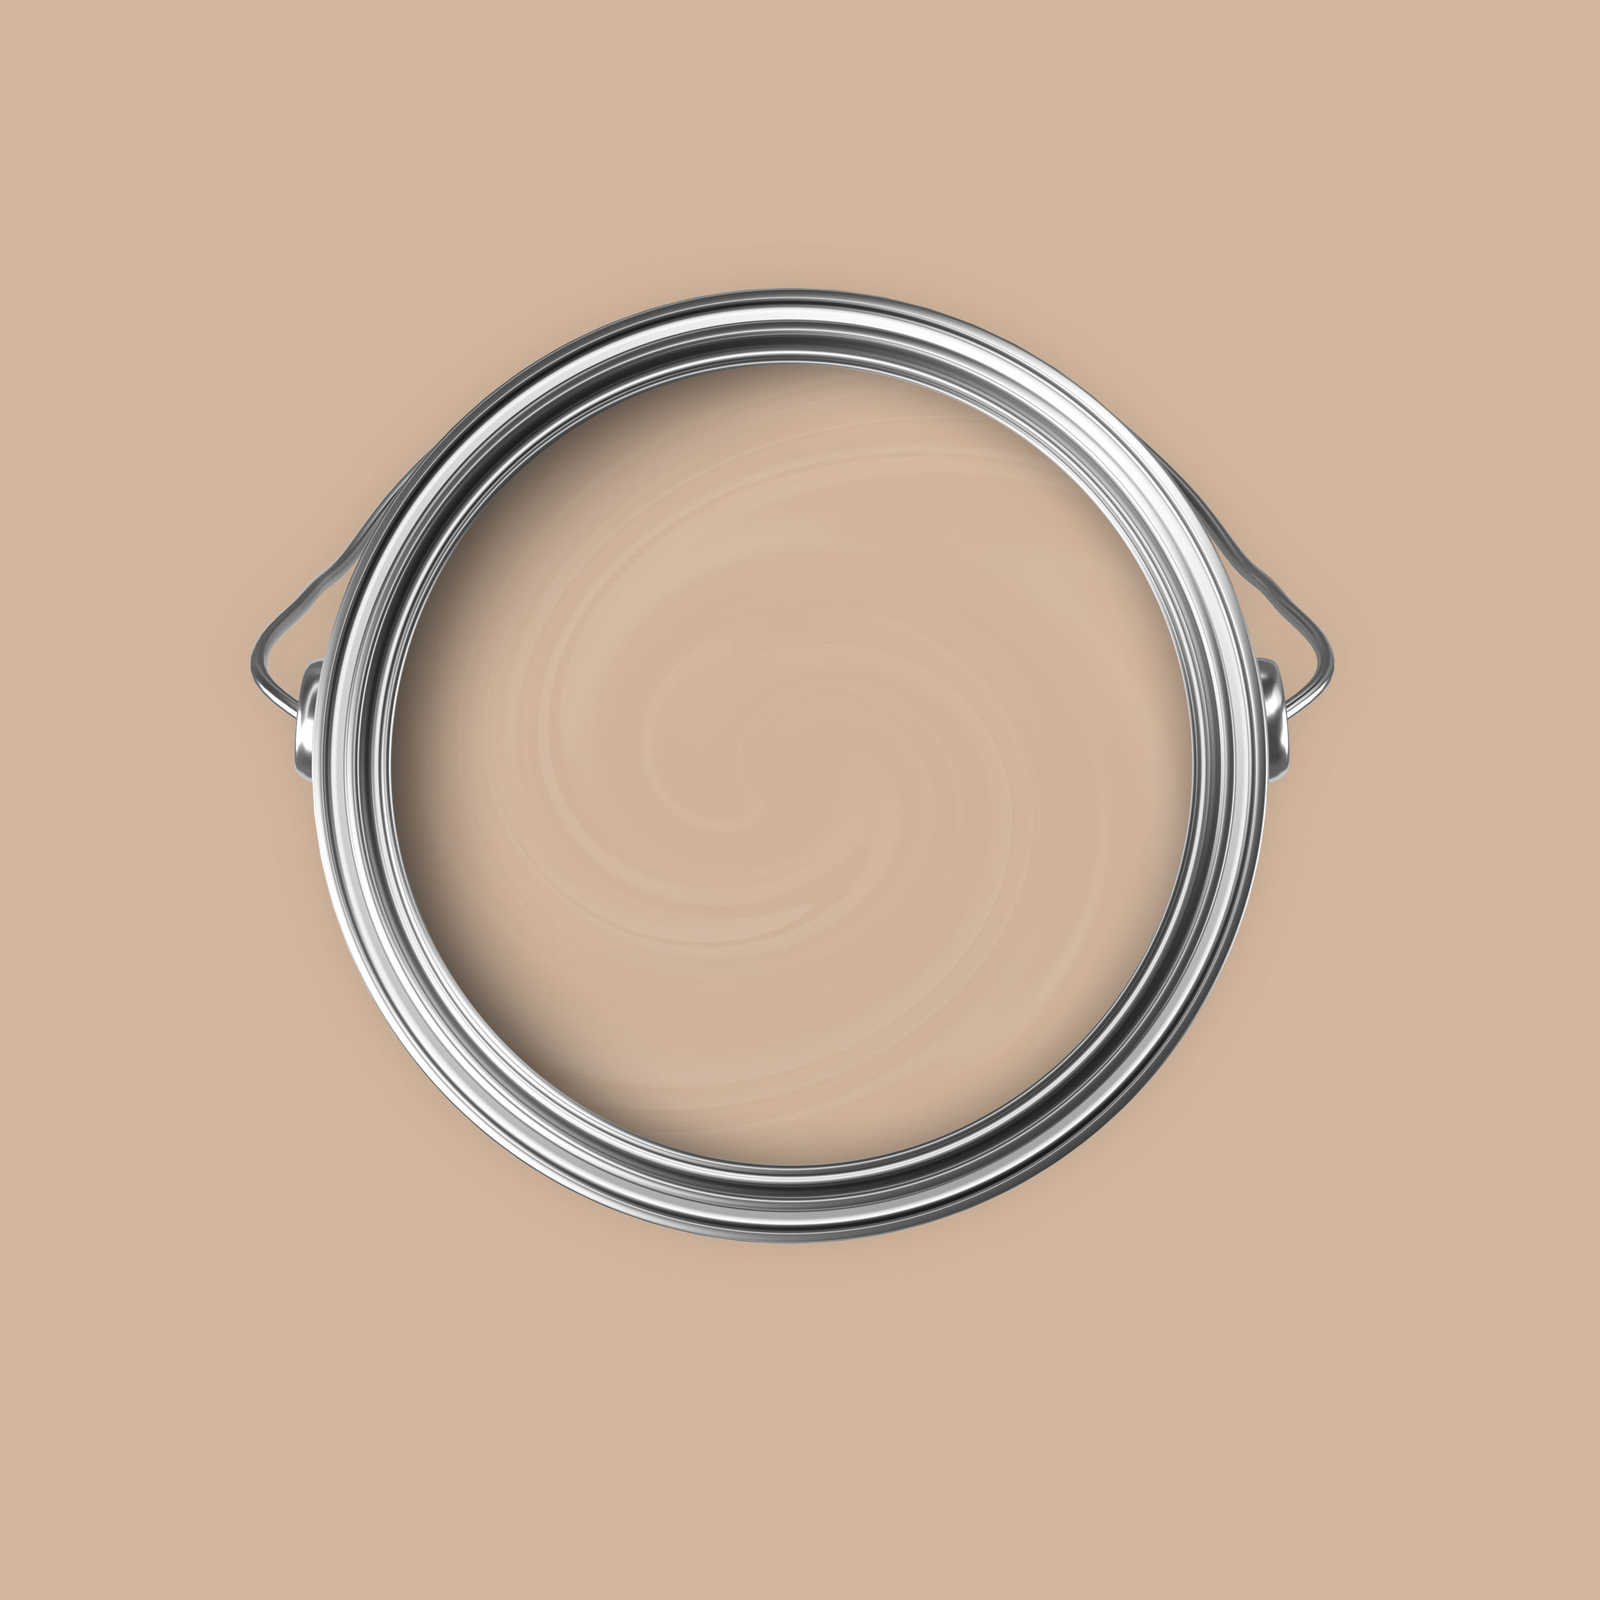             Premium Wall Paint Soft Cappuccino »Boho Beige« NW729 – 5 litre
        